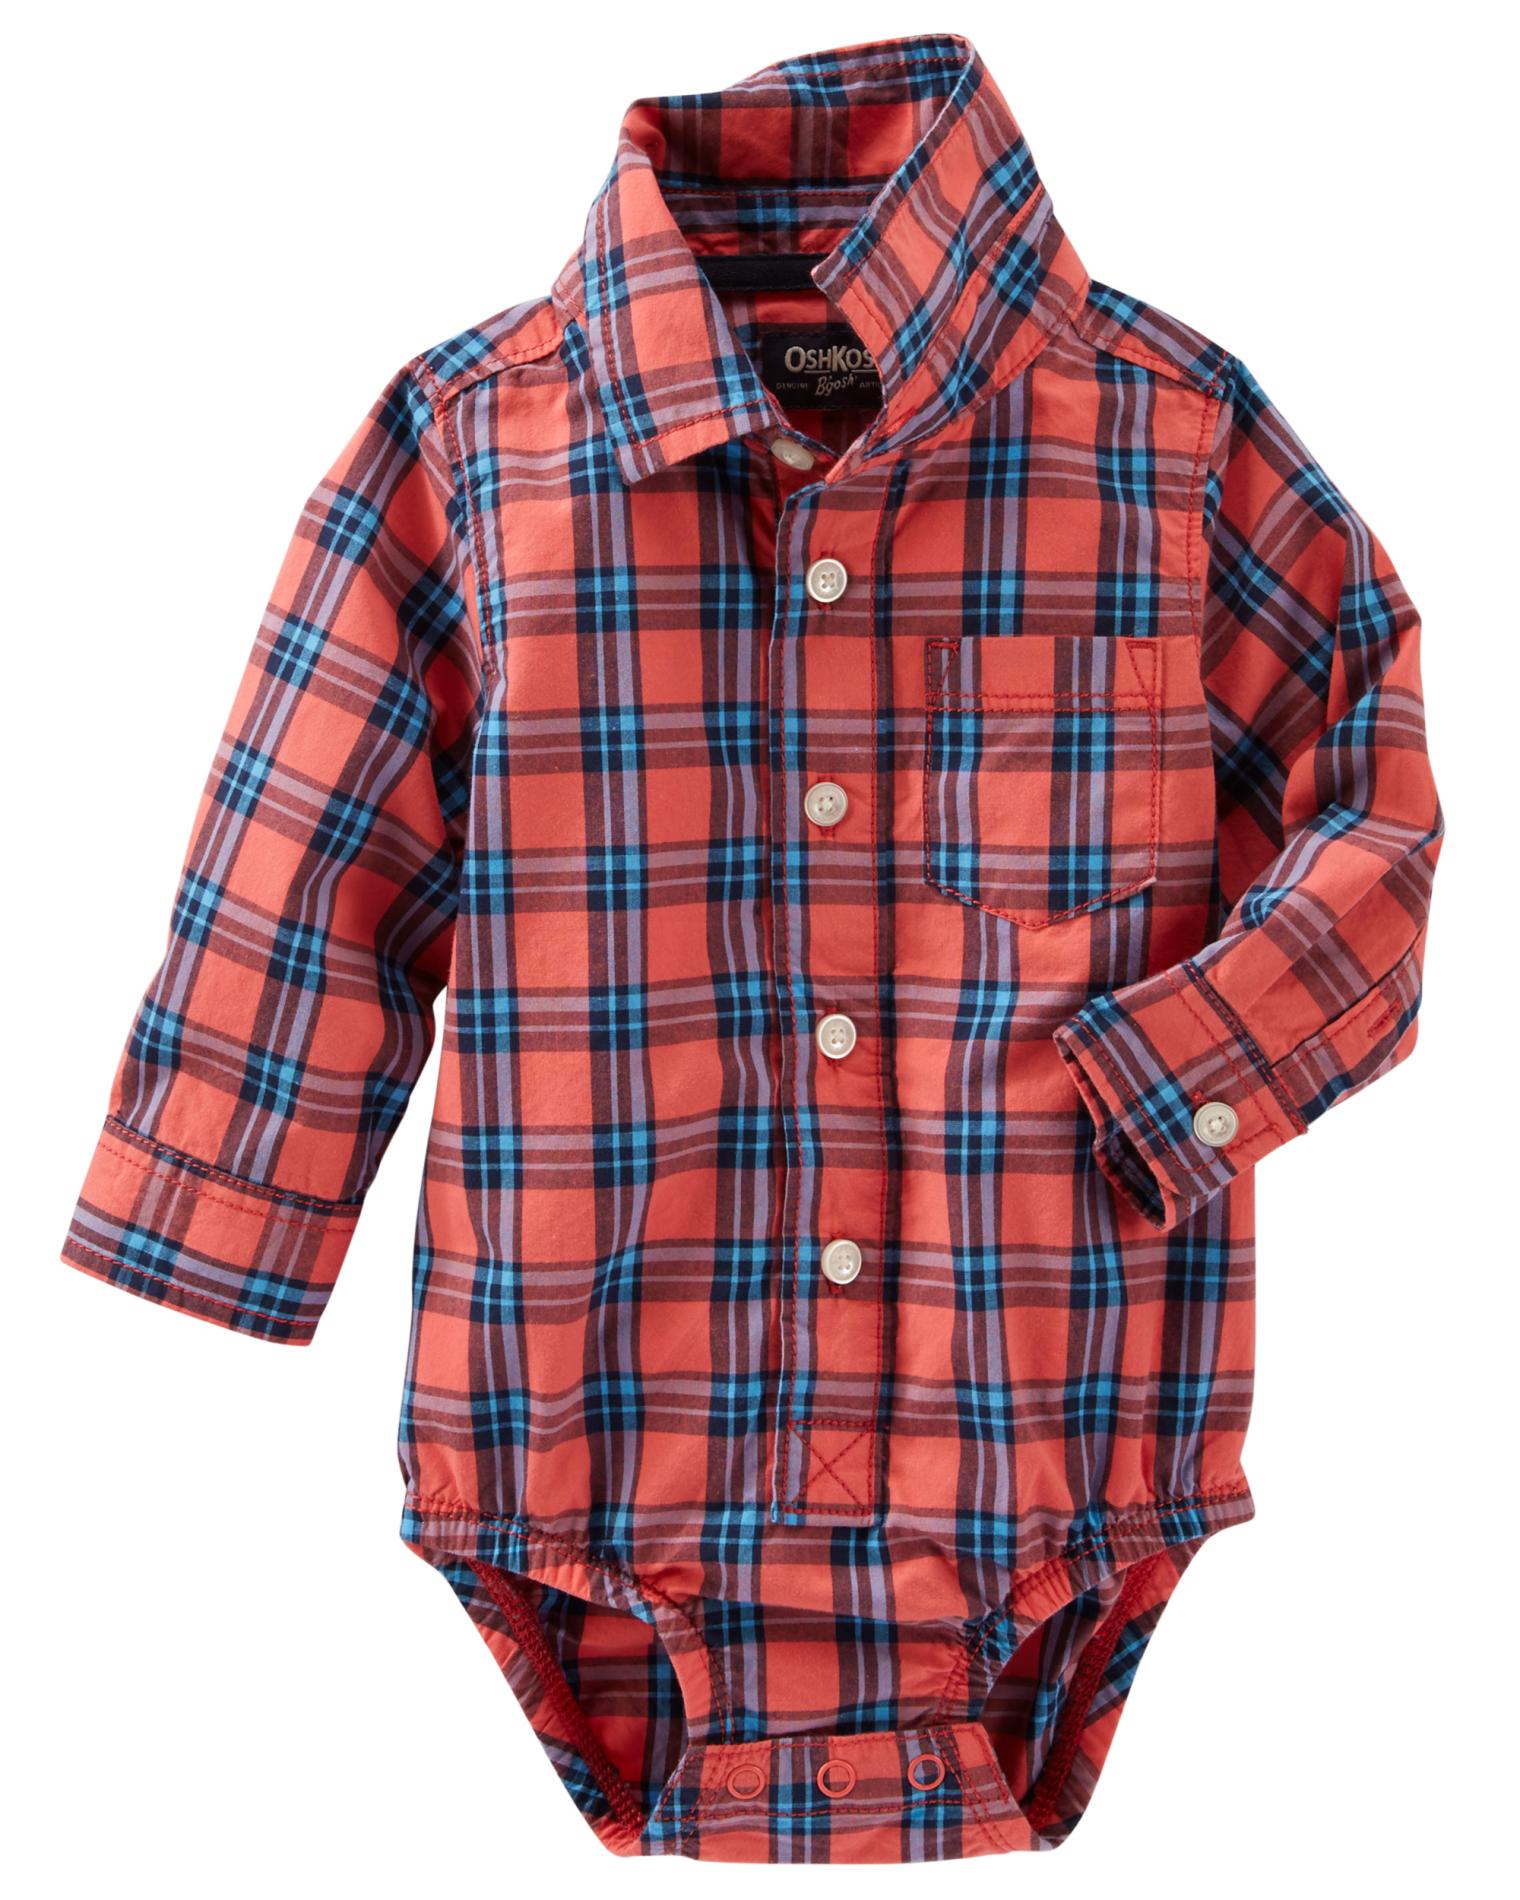 OshKosh Newborn & Infant Boys' Button-Front Bodysuit - Plaid